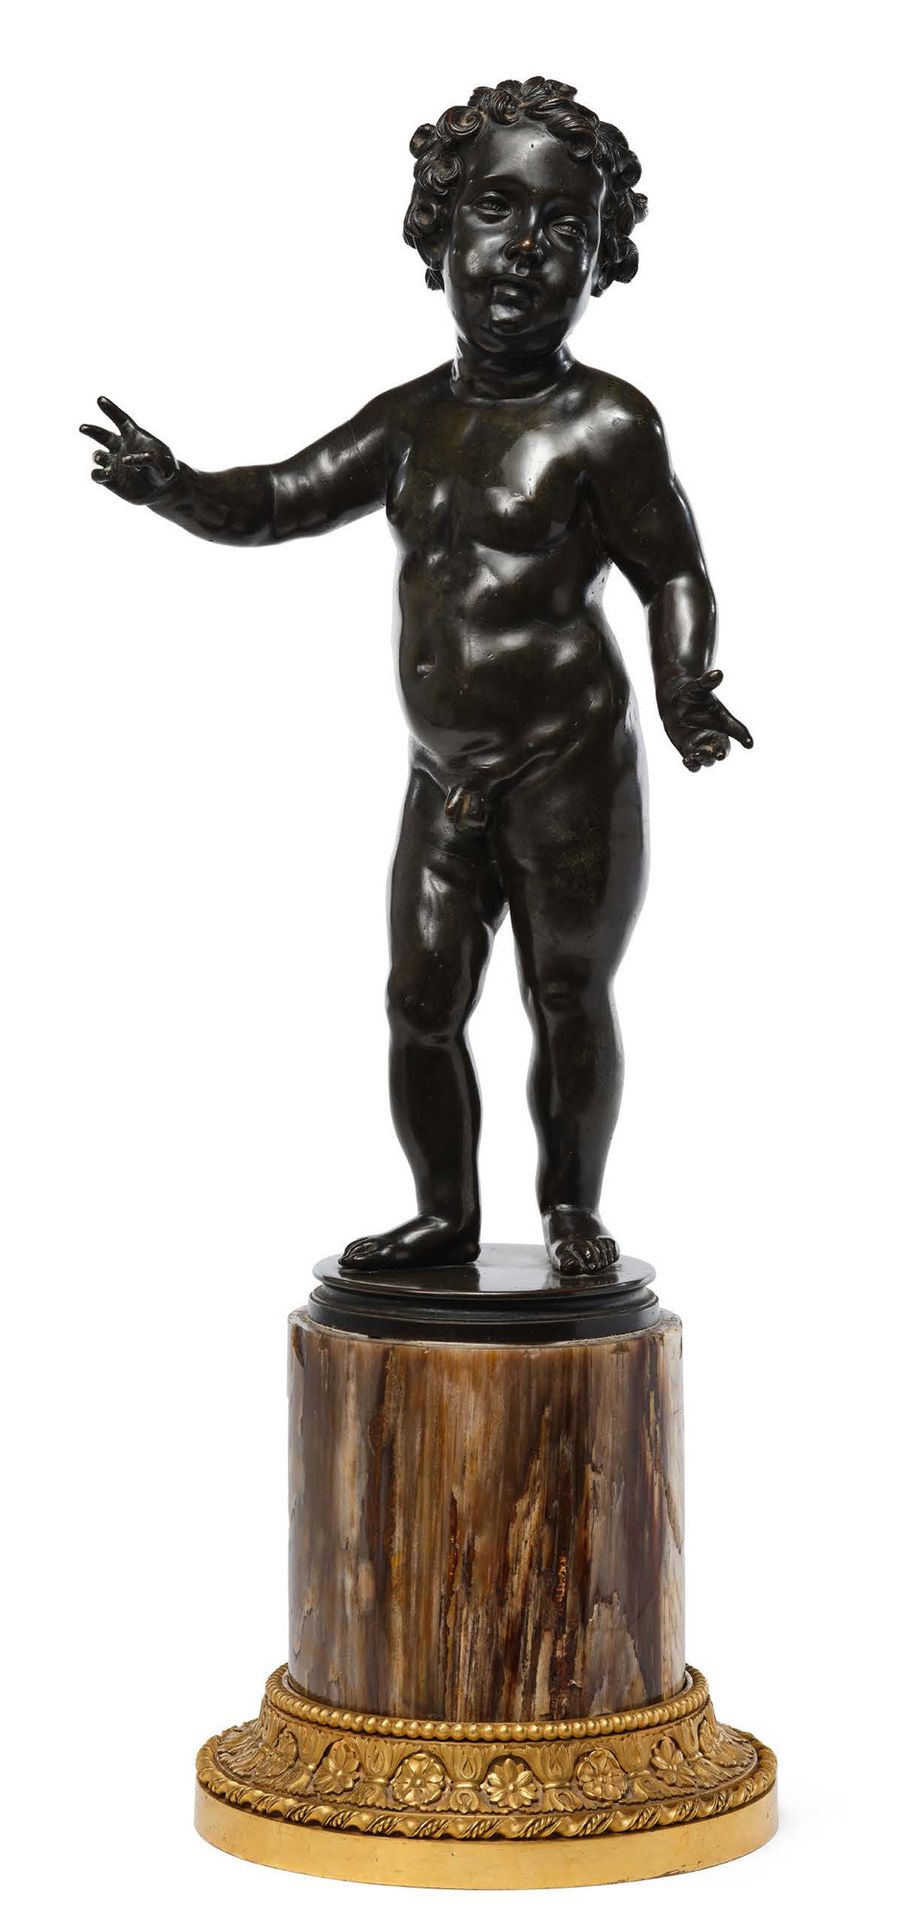 SUIVEUR D'ANDREA DEL VERROCCHIO (1435 - 1488) Naked standing child in bronze wit&hellip;